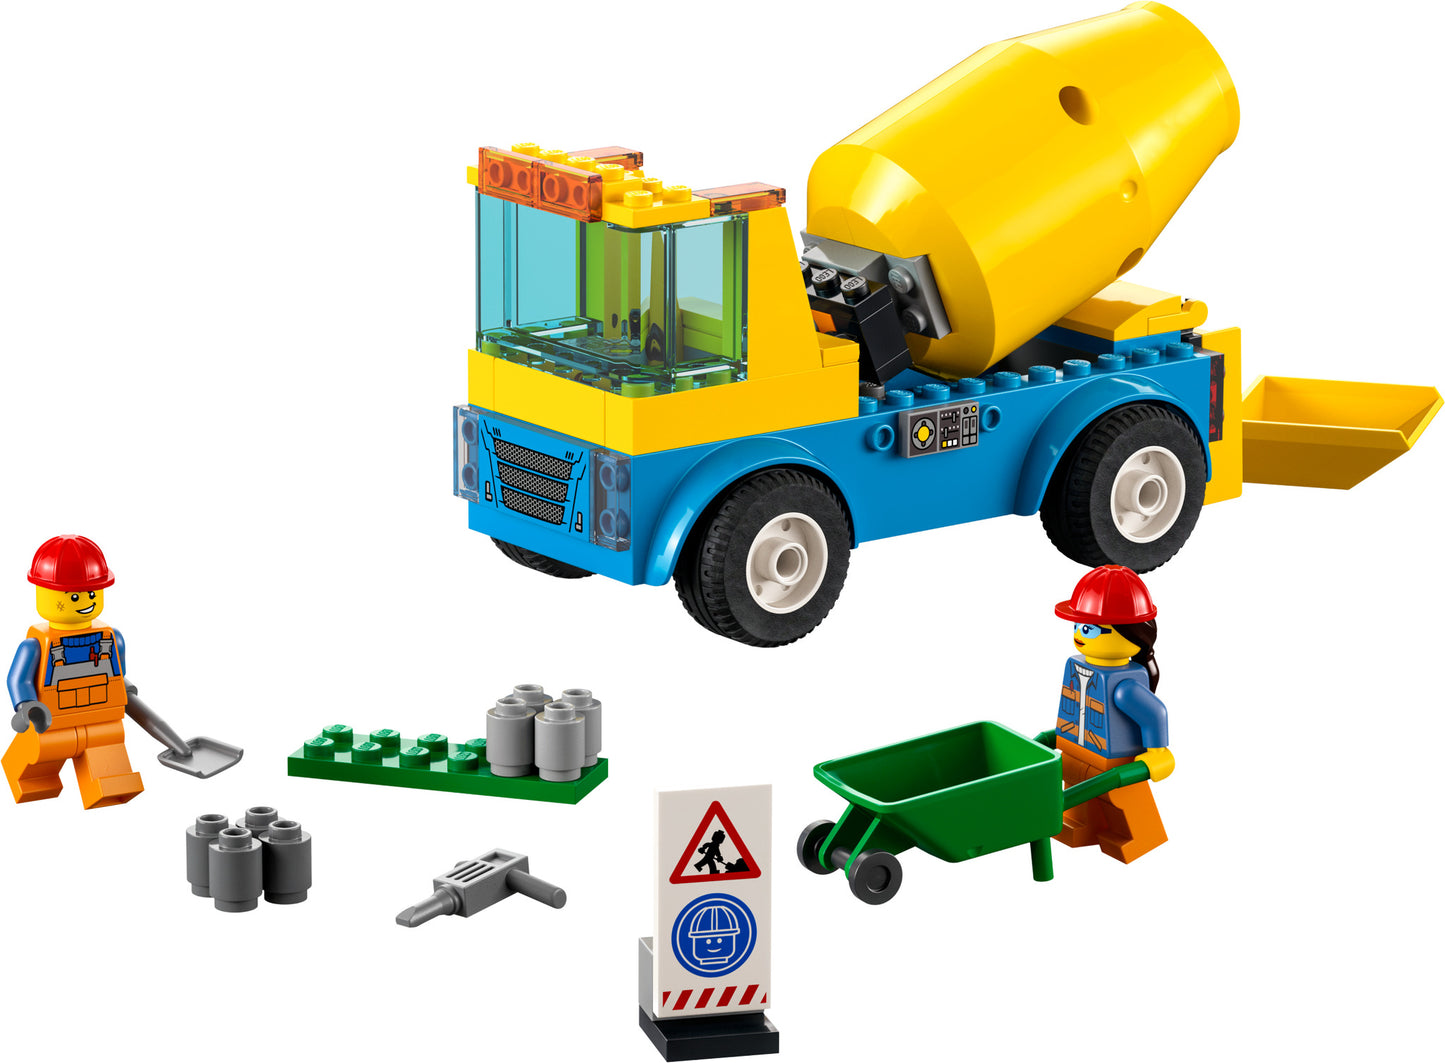 60325 LEGO City - Autobetoniera